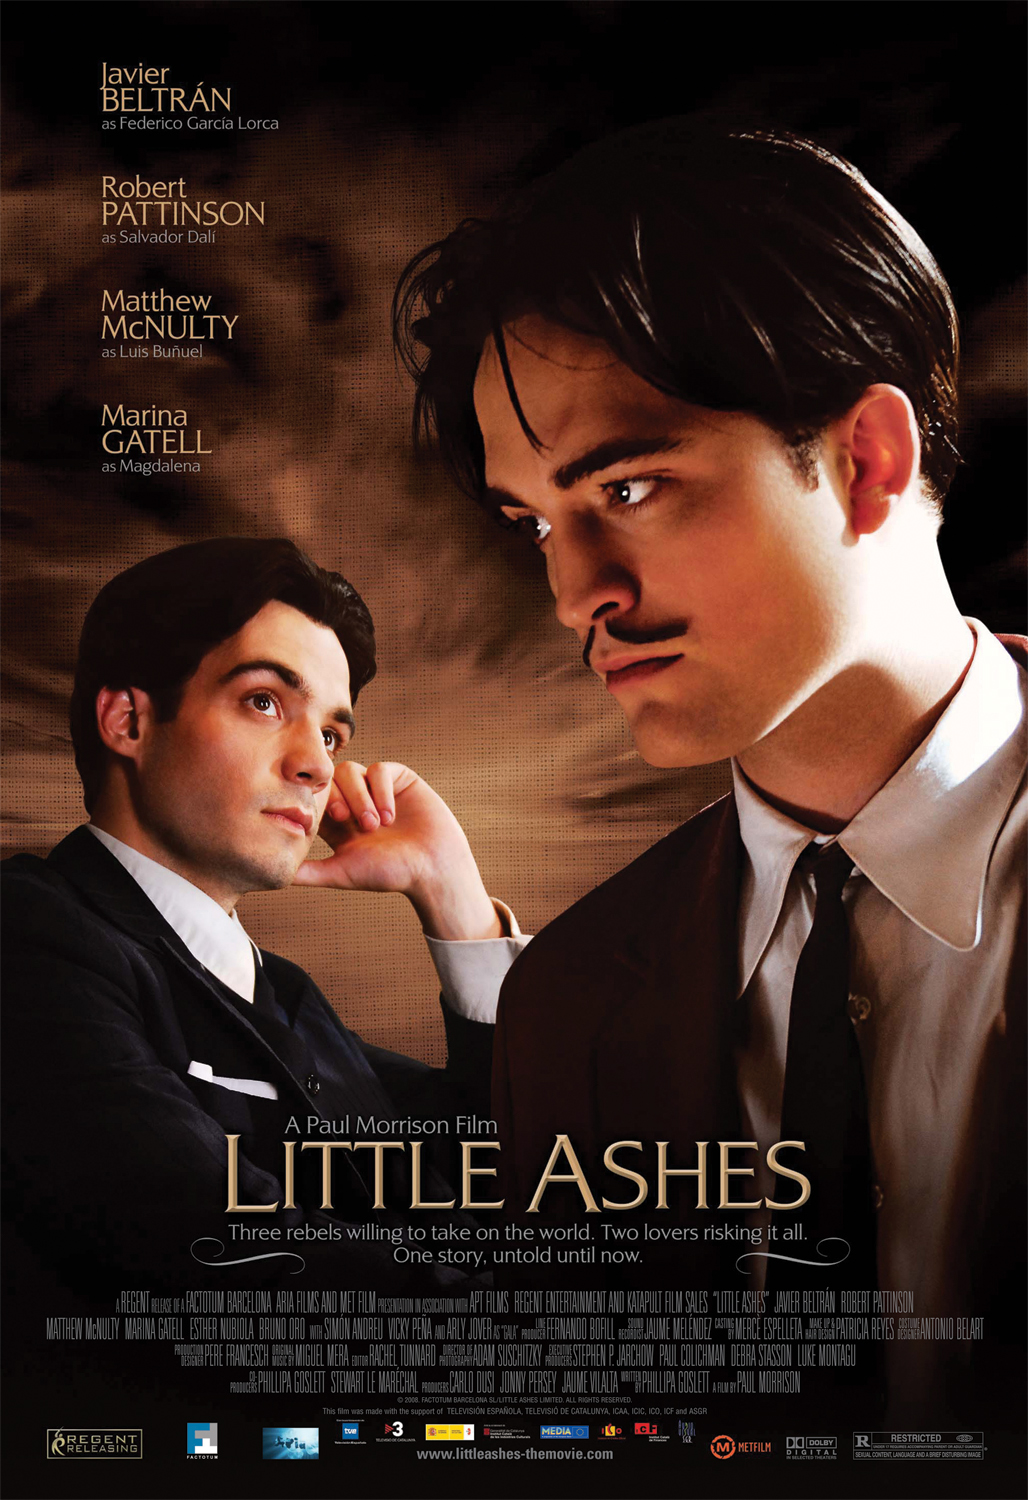 Robert Pattinson in Little Ashes